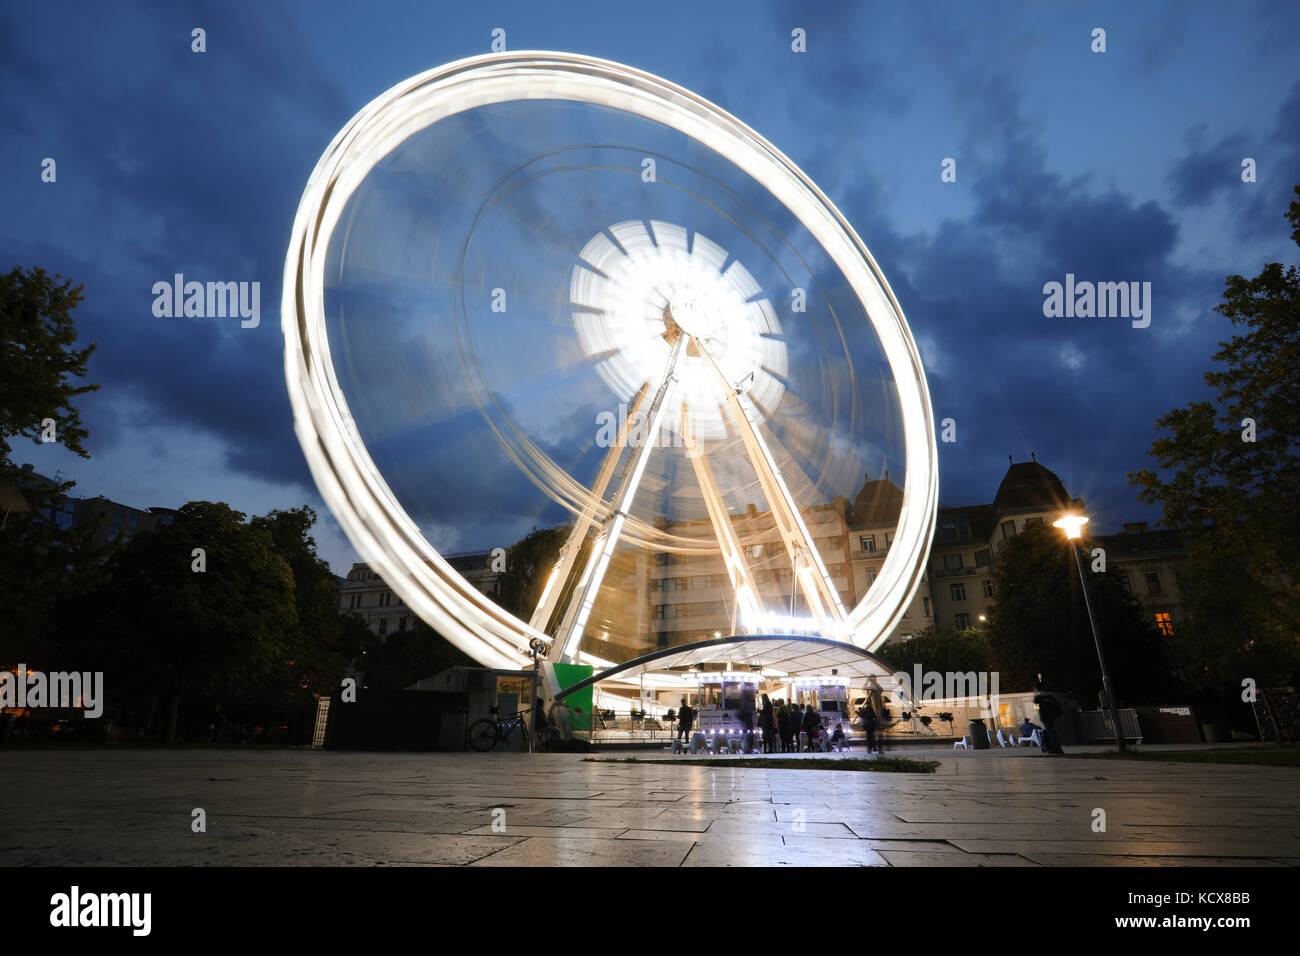 Luminous Ferris wheel in night city. Budapest Eye at night. Sziget Eye. Stock Photo